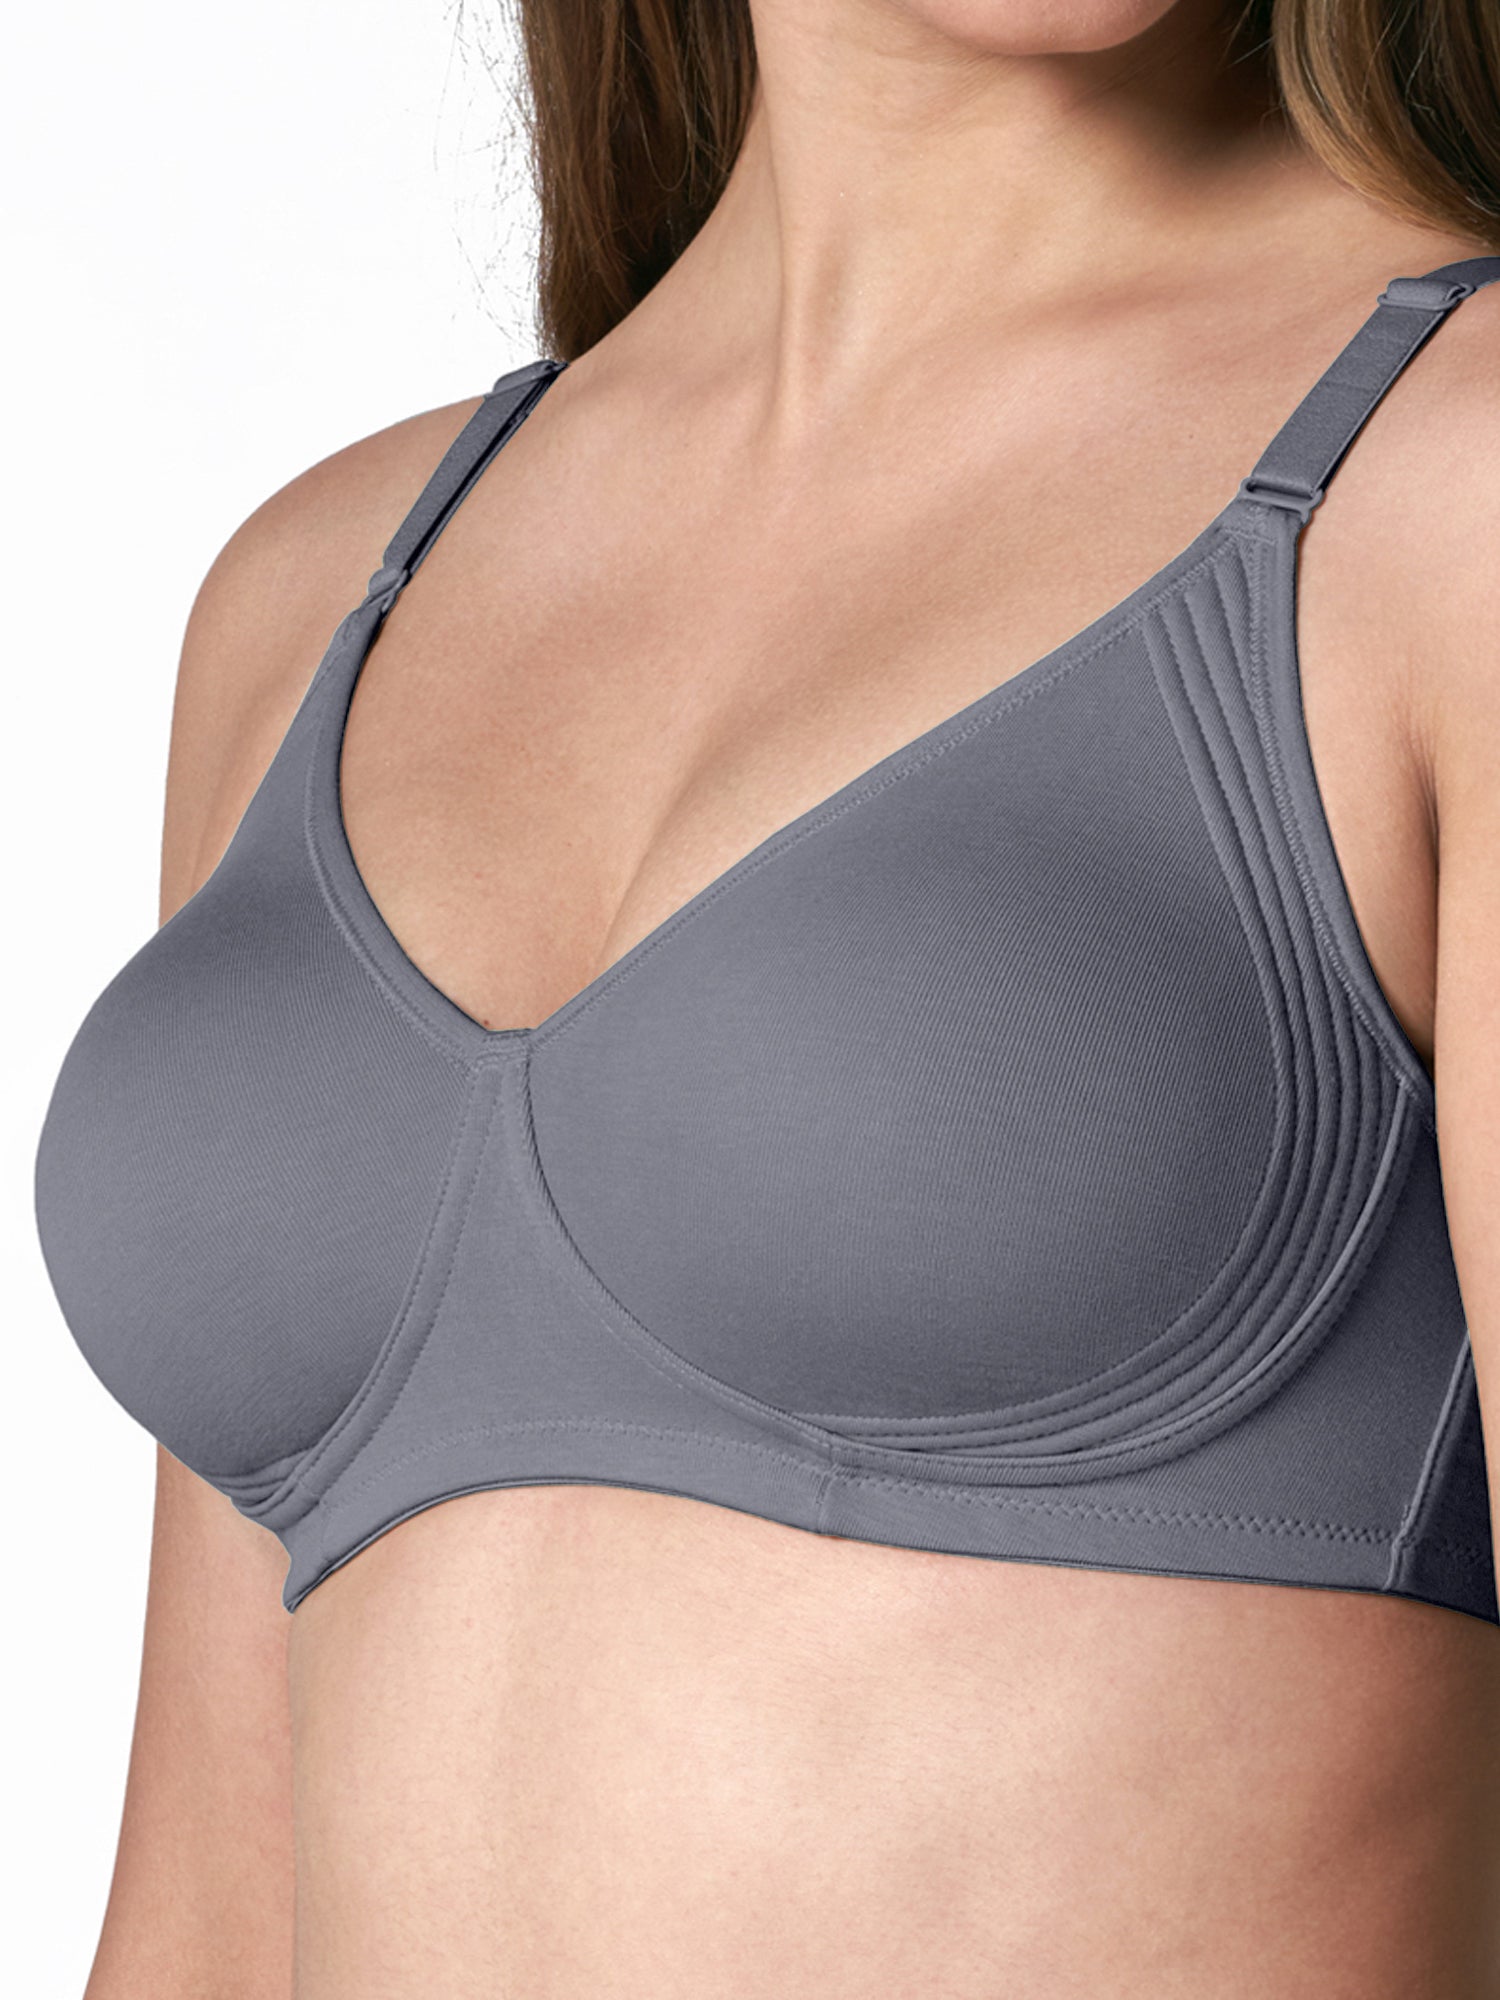 blossom-encircle bra-silver grey2-support bra